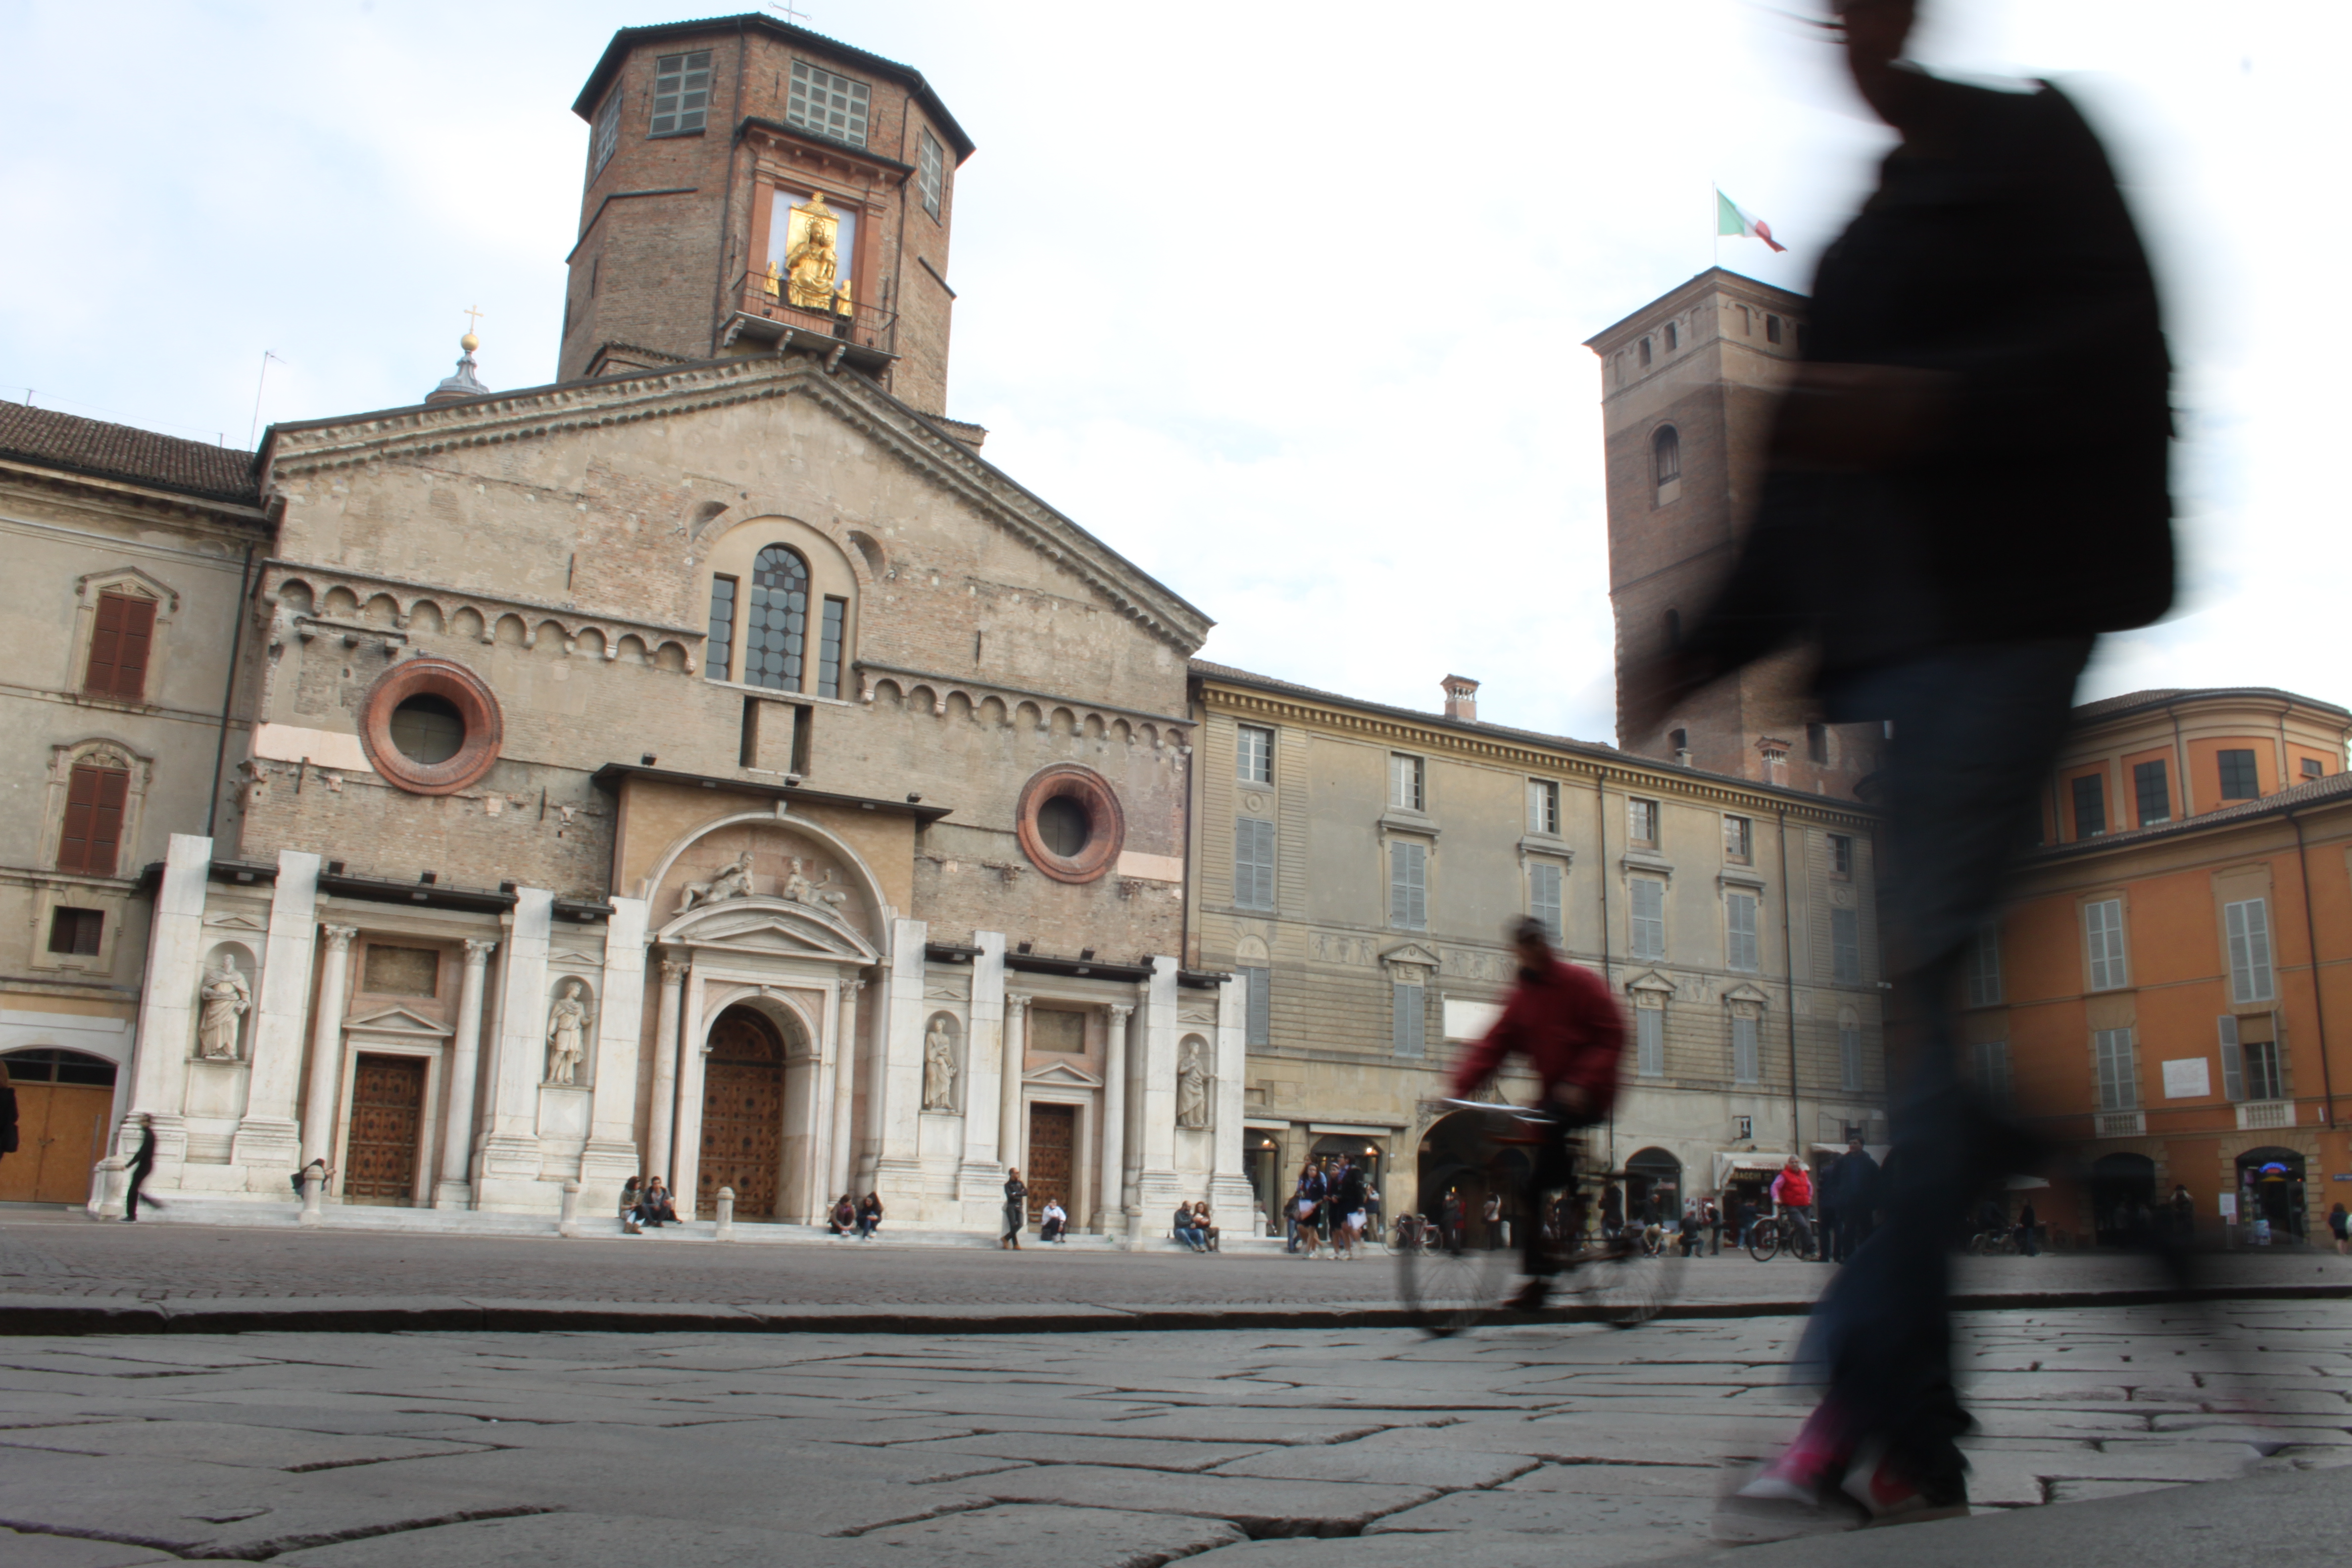 foto: https://upload.wikimedia.org/wikipedia/commons/5/57/Piazza_prampolini_-_cattedrale_2012.JPG